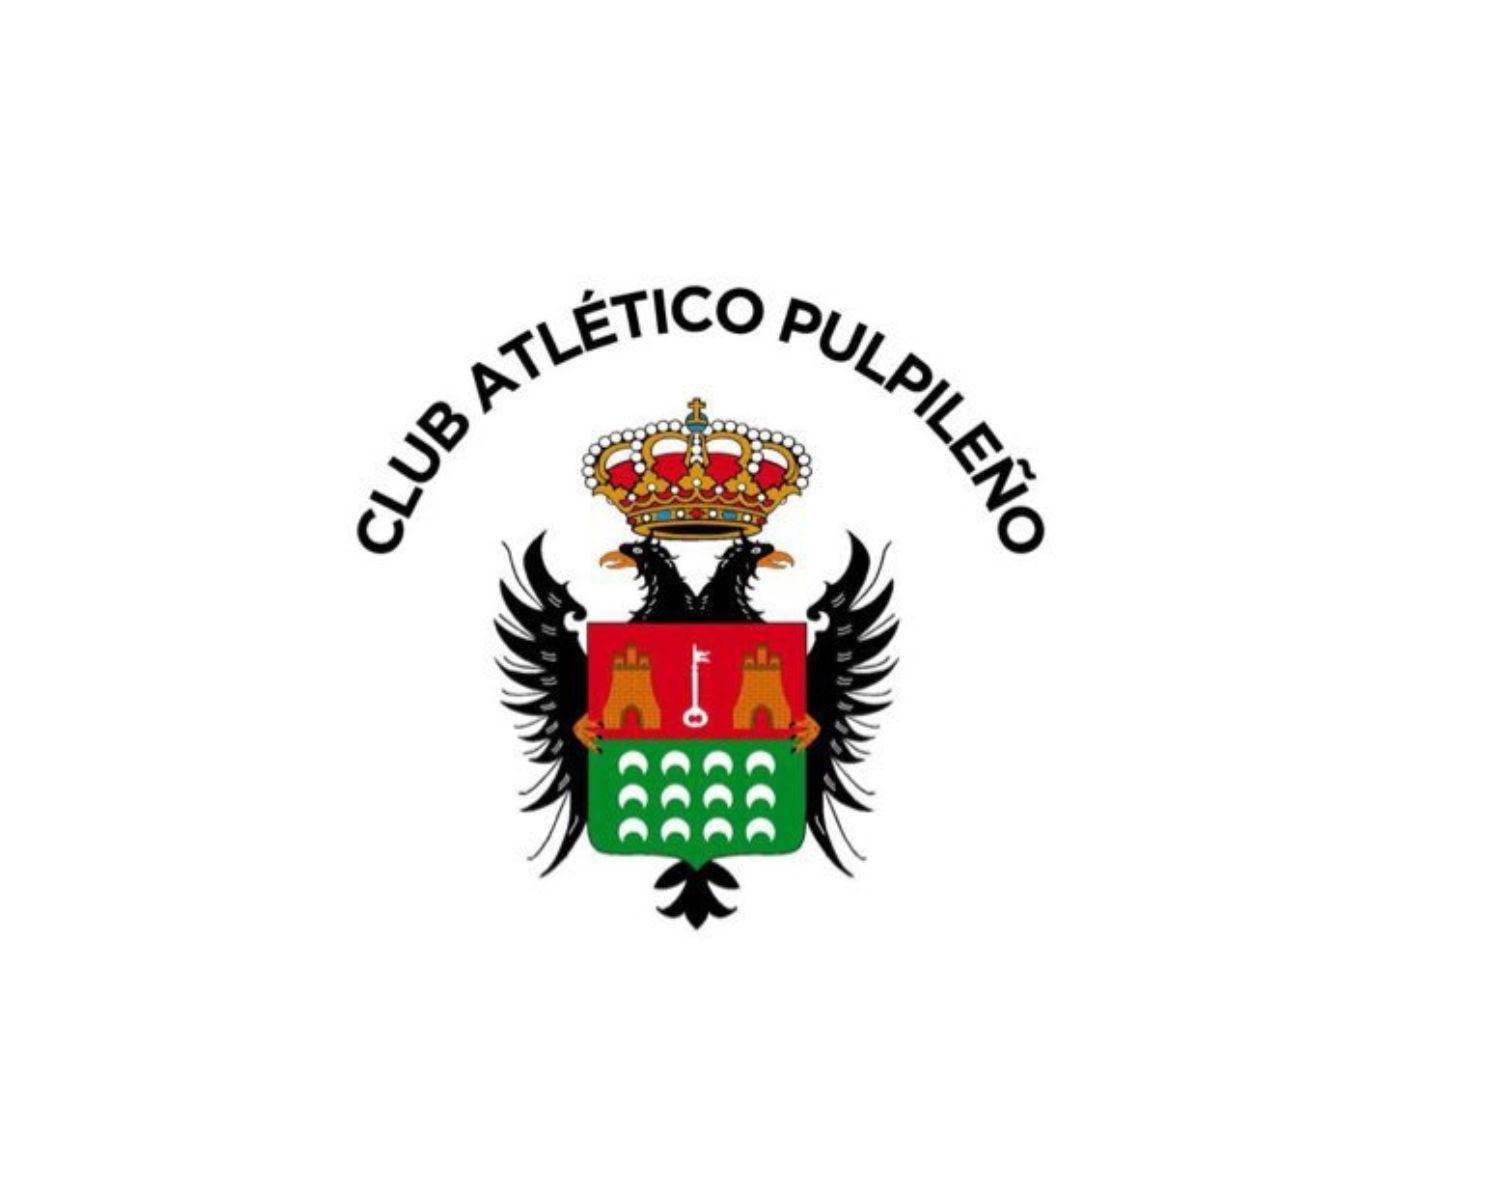 ca-pulpileno-24-football-club-facts